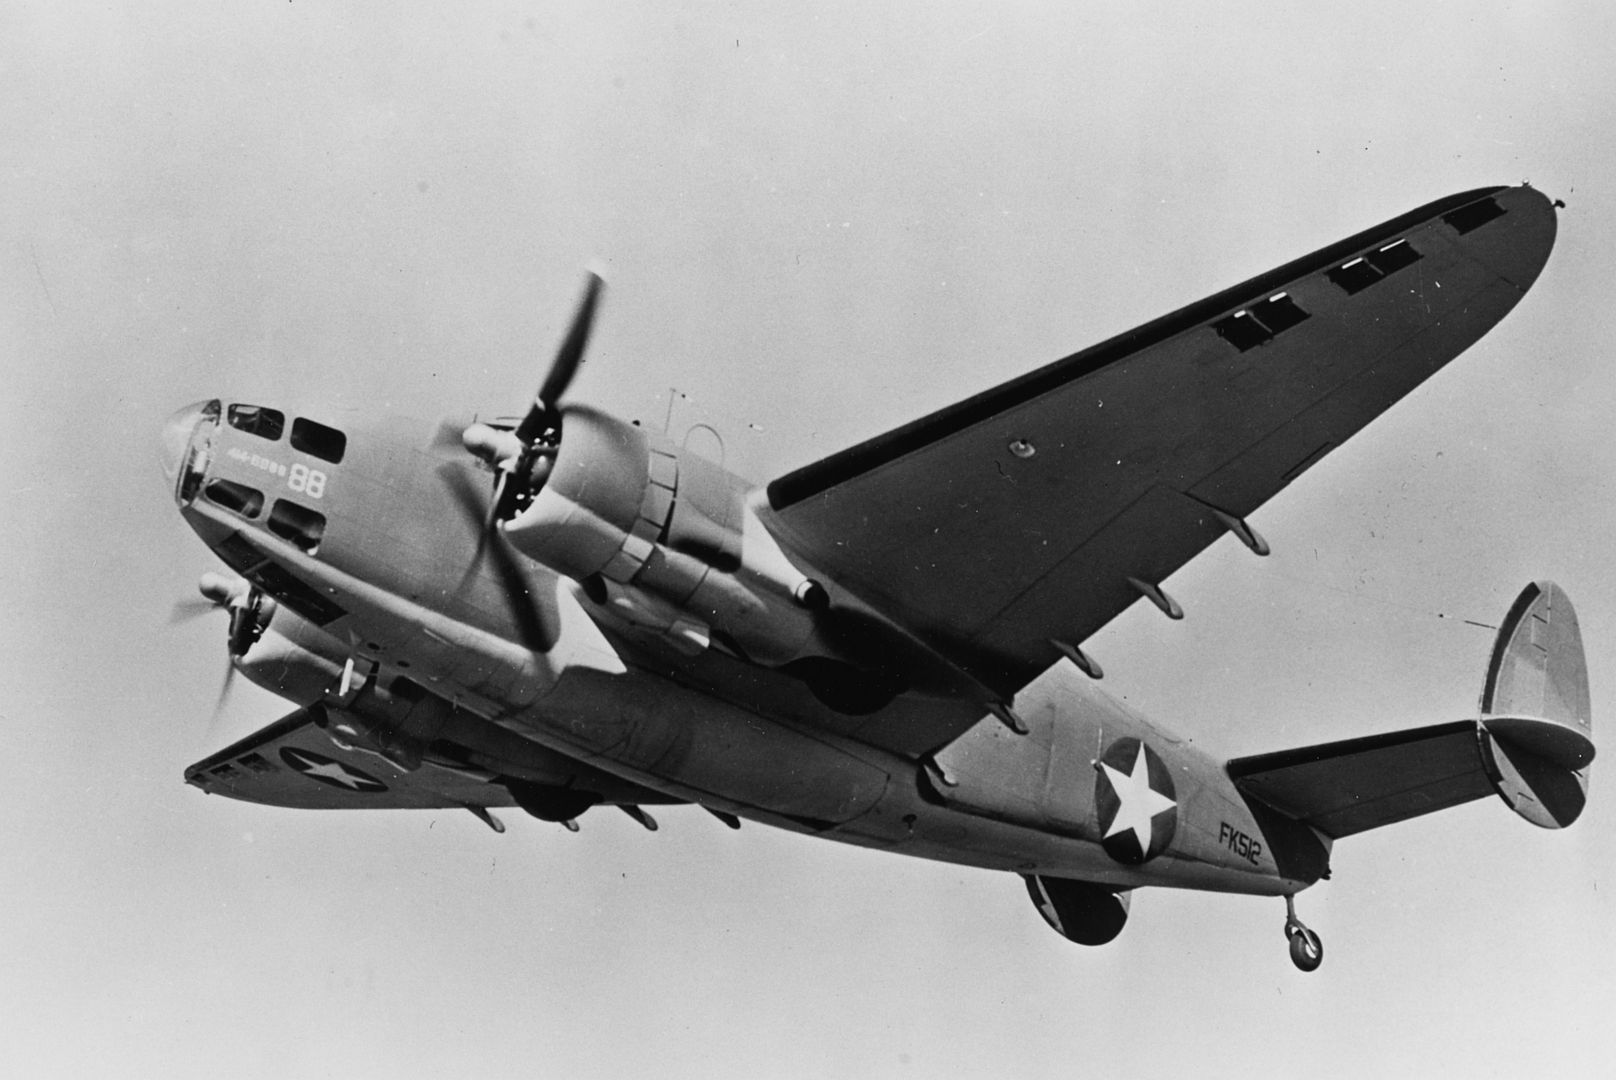 Lockheed PBO Hudson Patrol Bomber